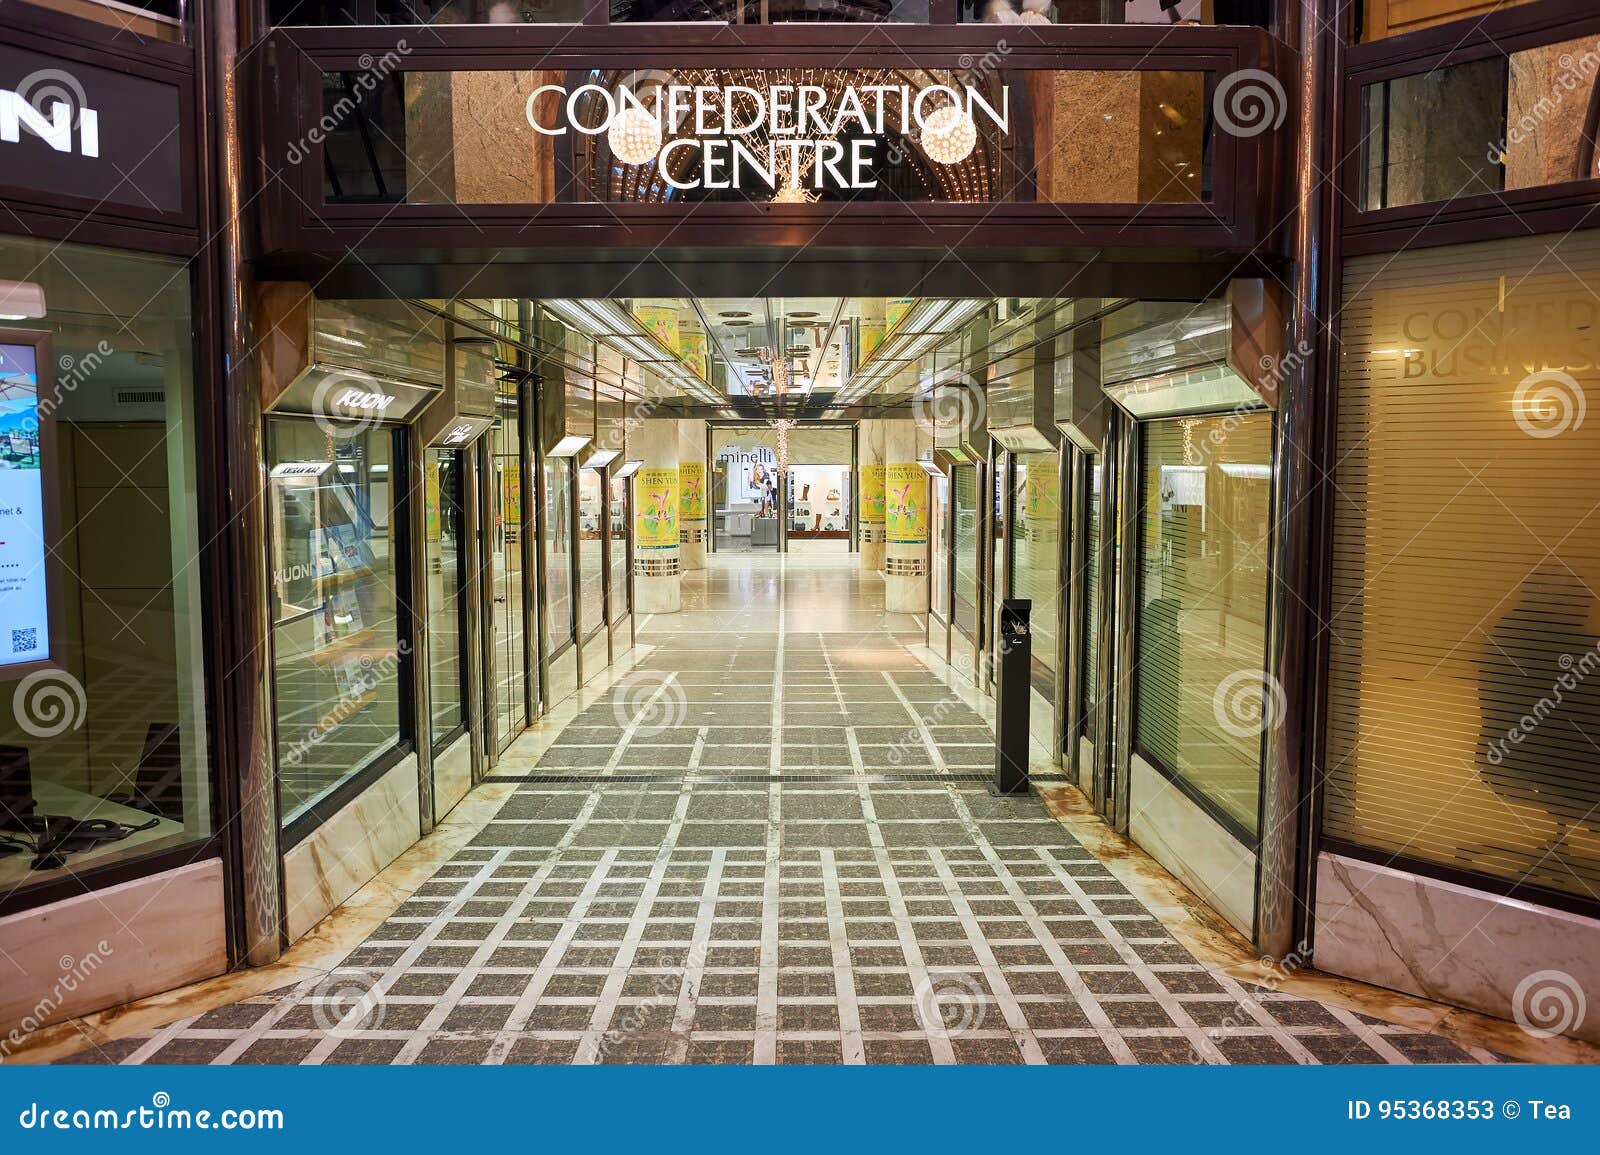 Confederation Centre Shopping Mall Editorial Stock Photo Image